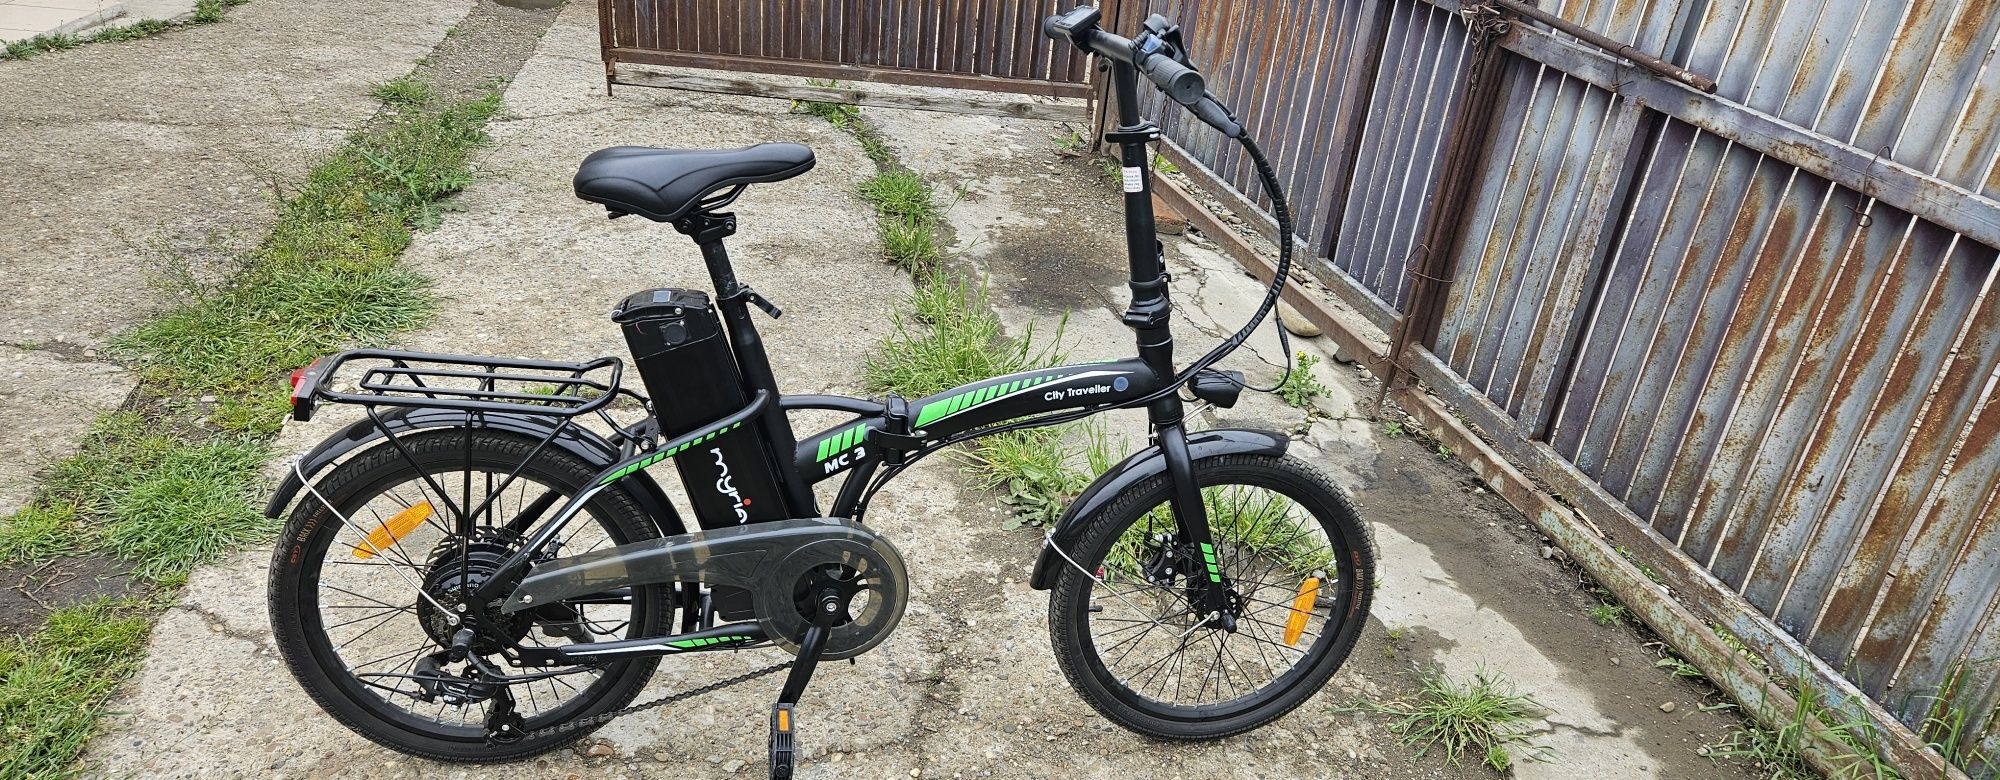 Bicicleta electrica noua